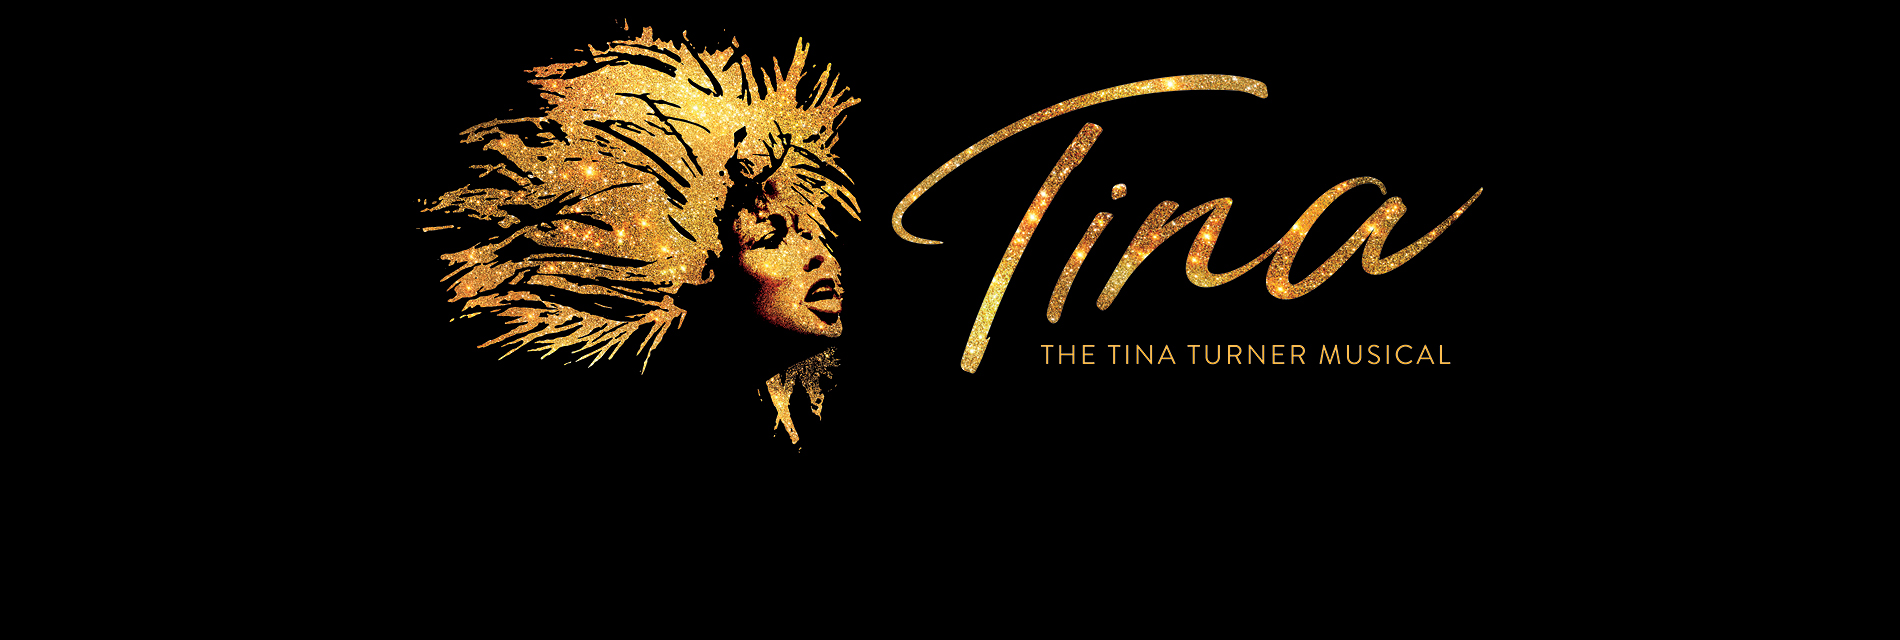 Slide 4: Tina - The Tina Turner Musical